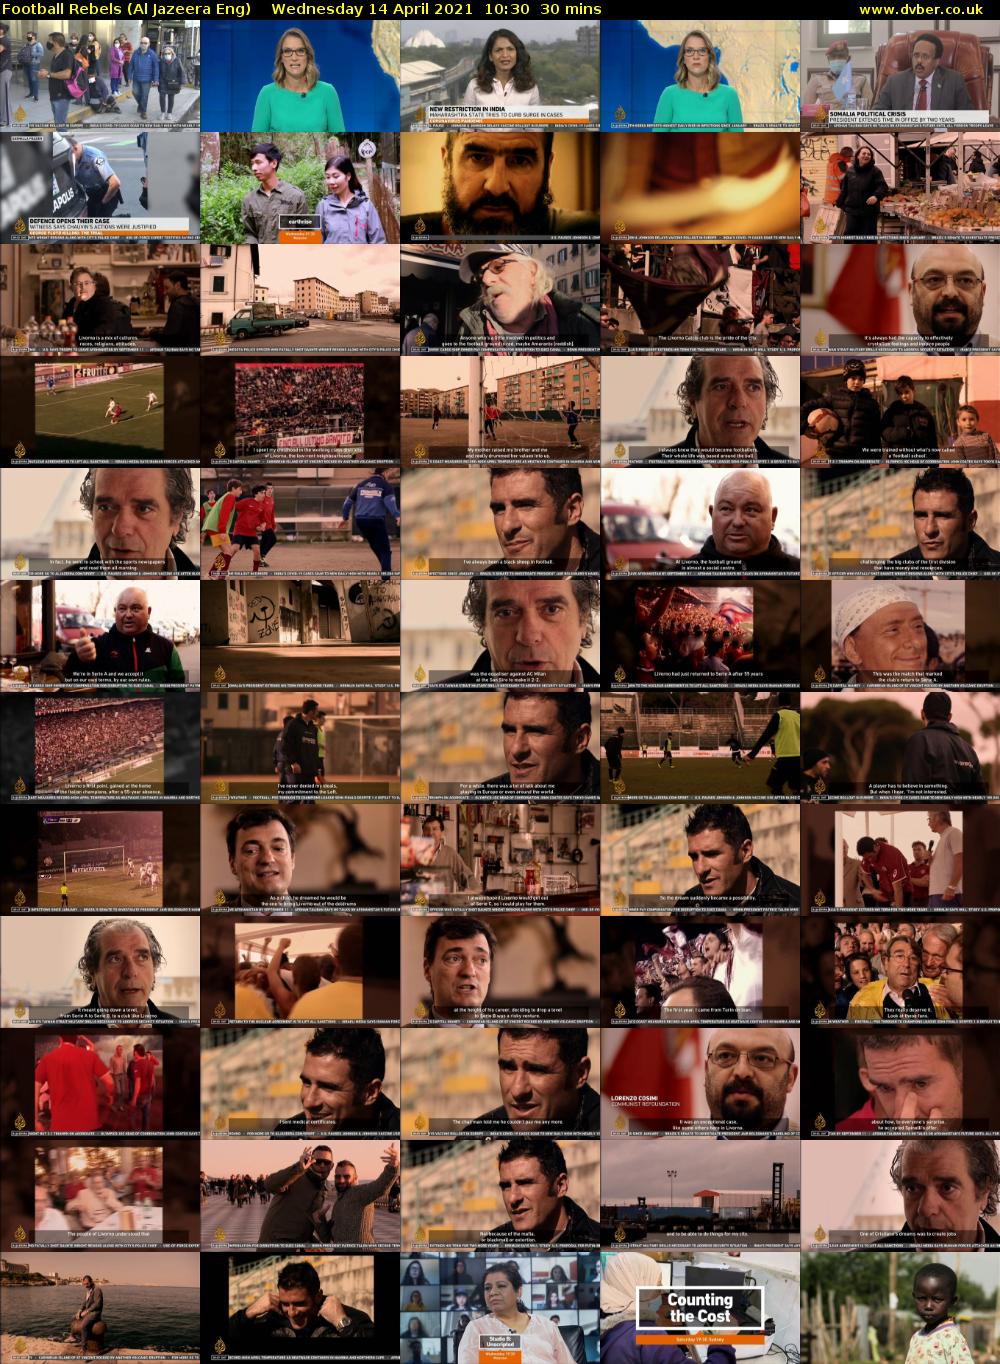 Football Rebels (Al Jazeera Eng) Wednesday 14 April 2021 10:30 - 11:00